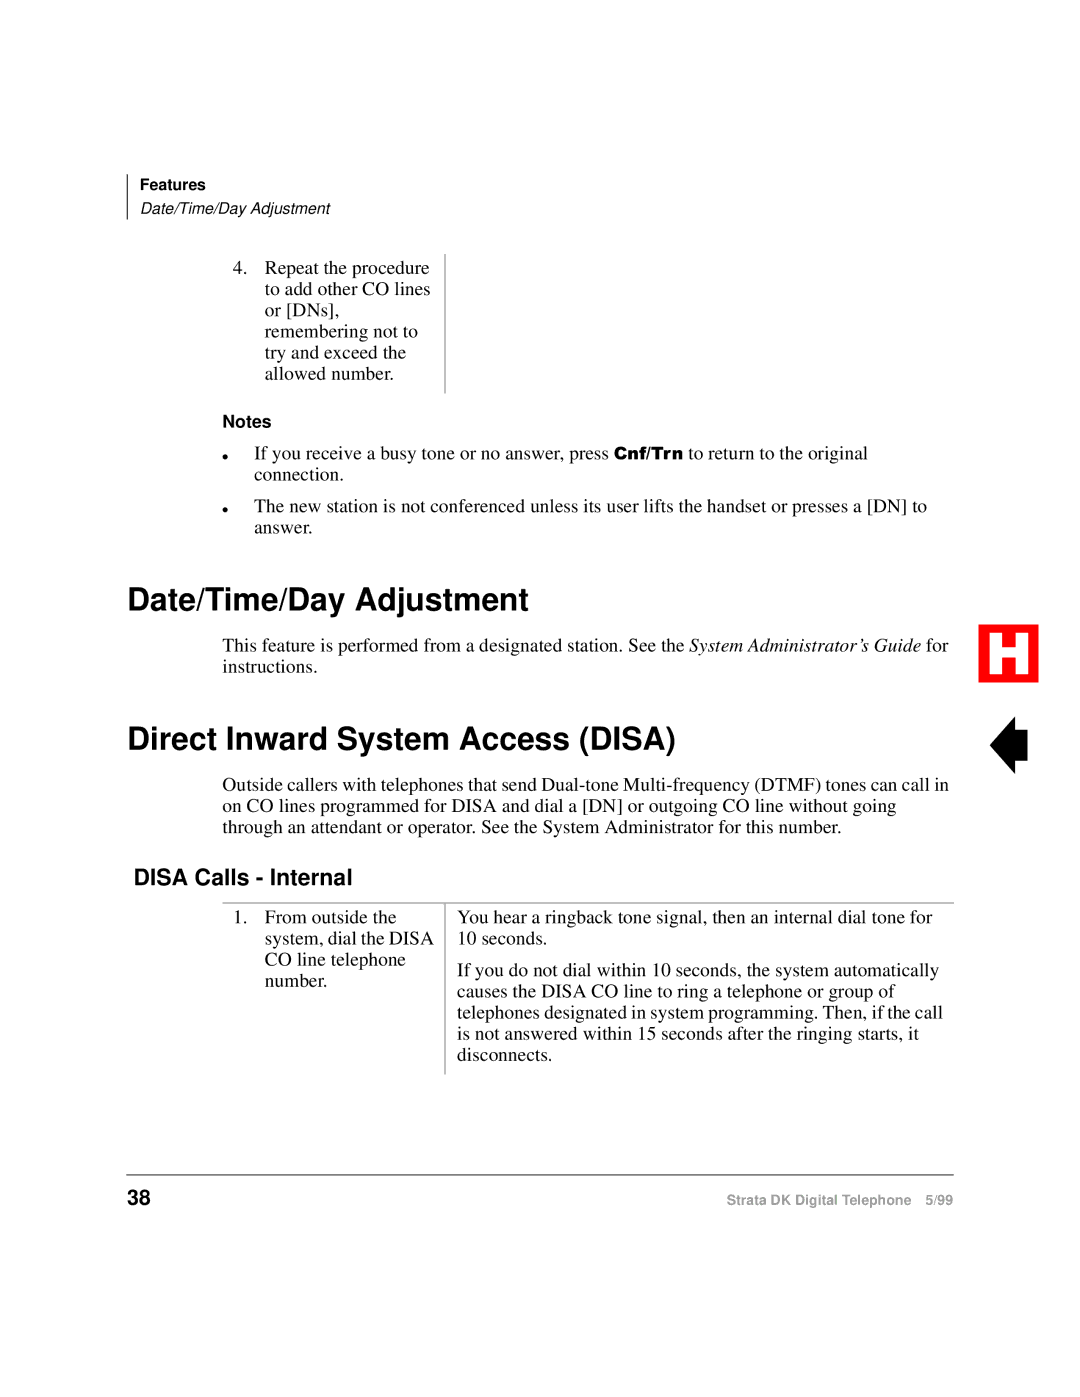 Toshiba Digital Telephone manual Date/Time/Day Adjustment, Direct Inward System Access Disa, Disa Calls Internal 